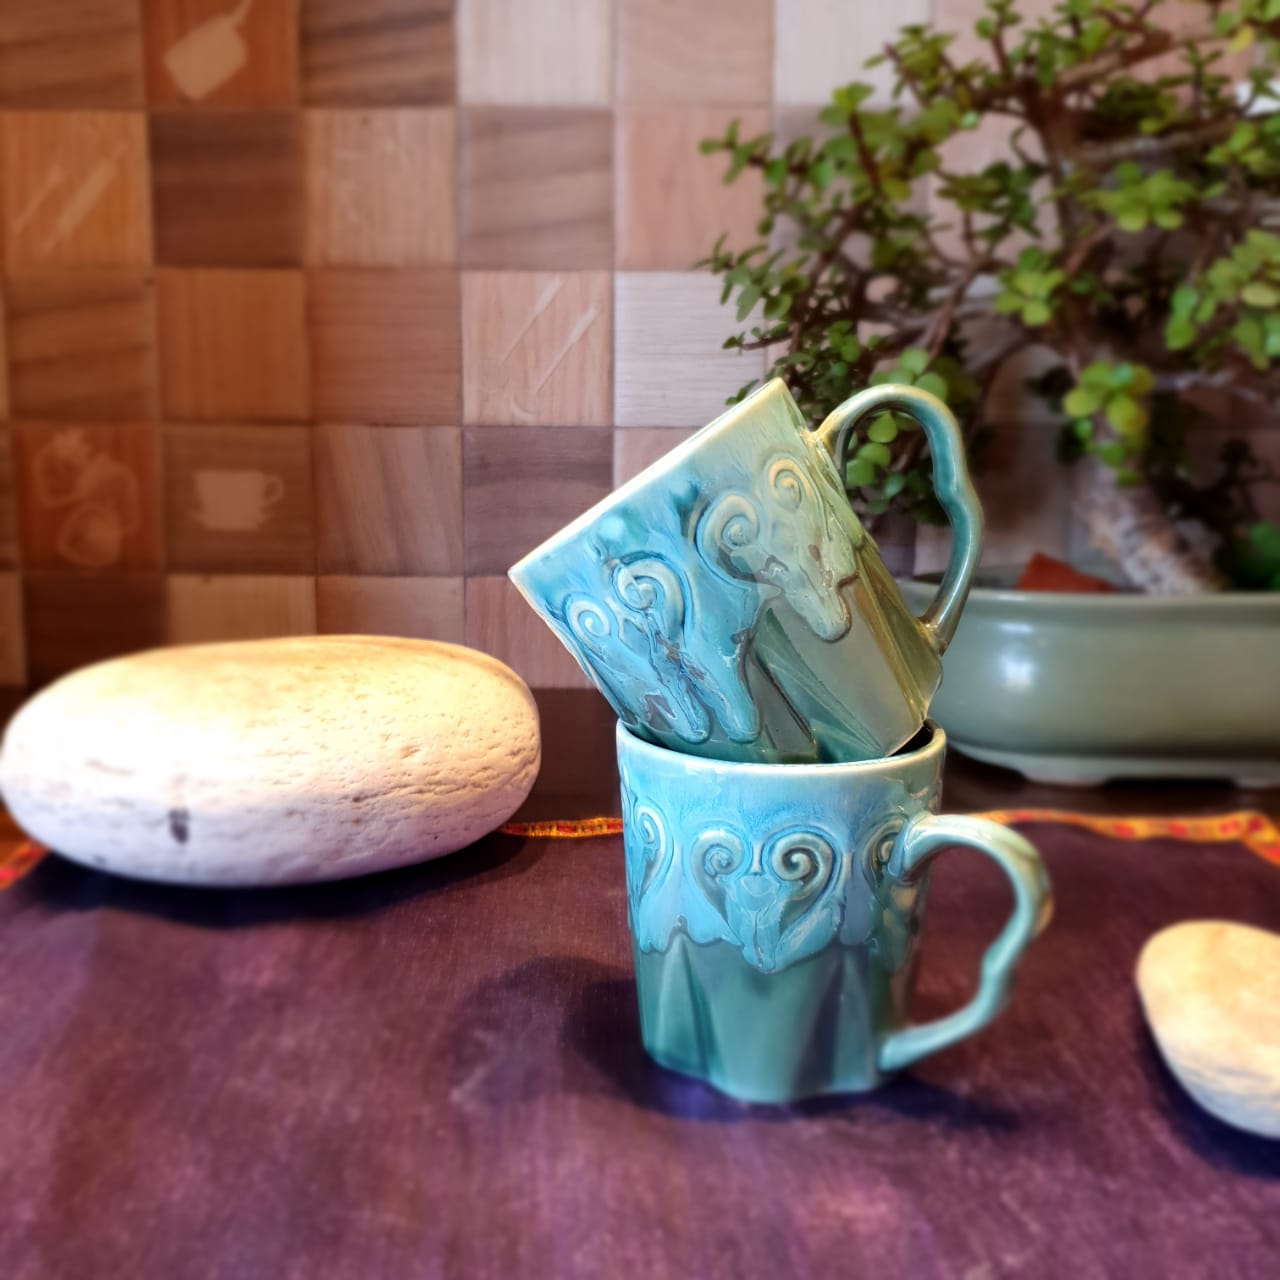 Little Hearts Ceramic Mugs, Set of 2, Coffee and Tea Mugs, Soup Mugs 170 Ml Each, Set of 2 Tea Cups